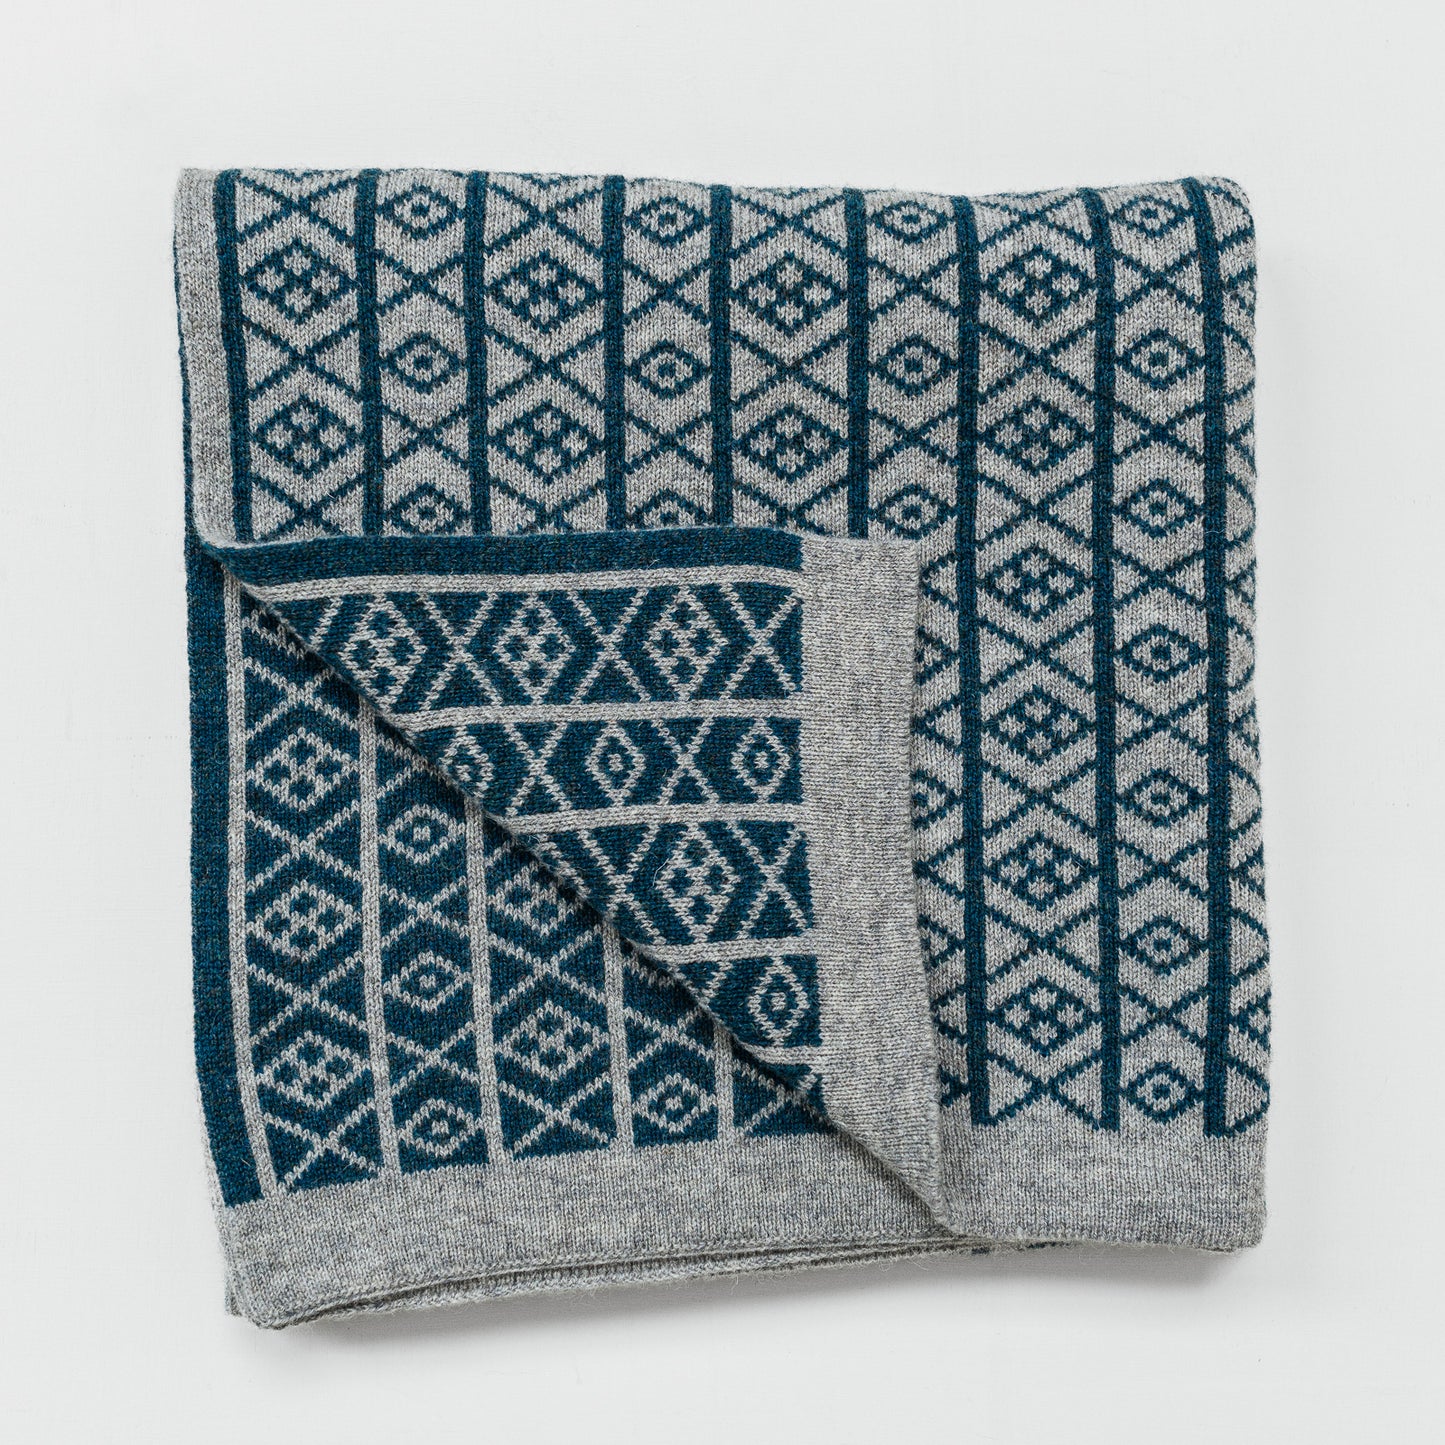 The Ruskin British Wool Jacquard Blanket in Kingfisher Blue / Grey